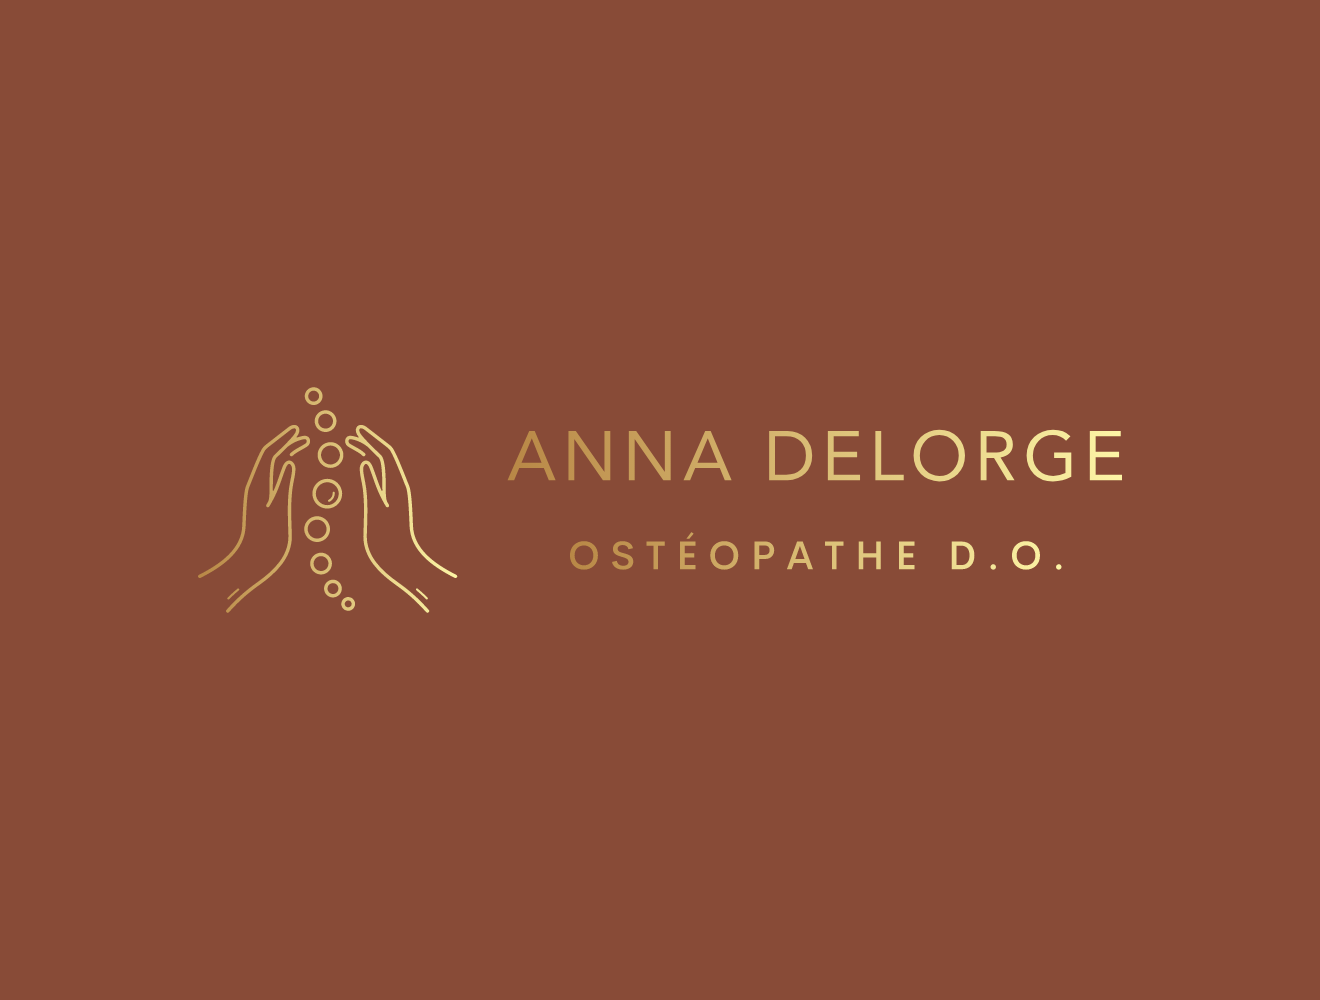 ANNA DELORGE OSTEOPATHE